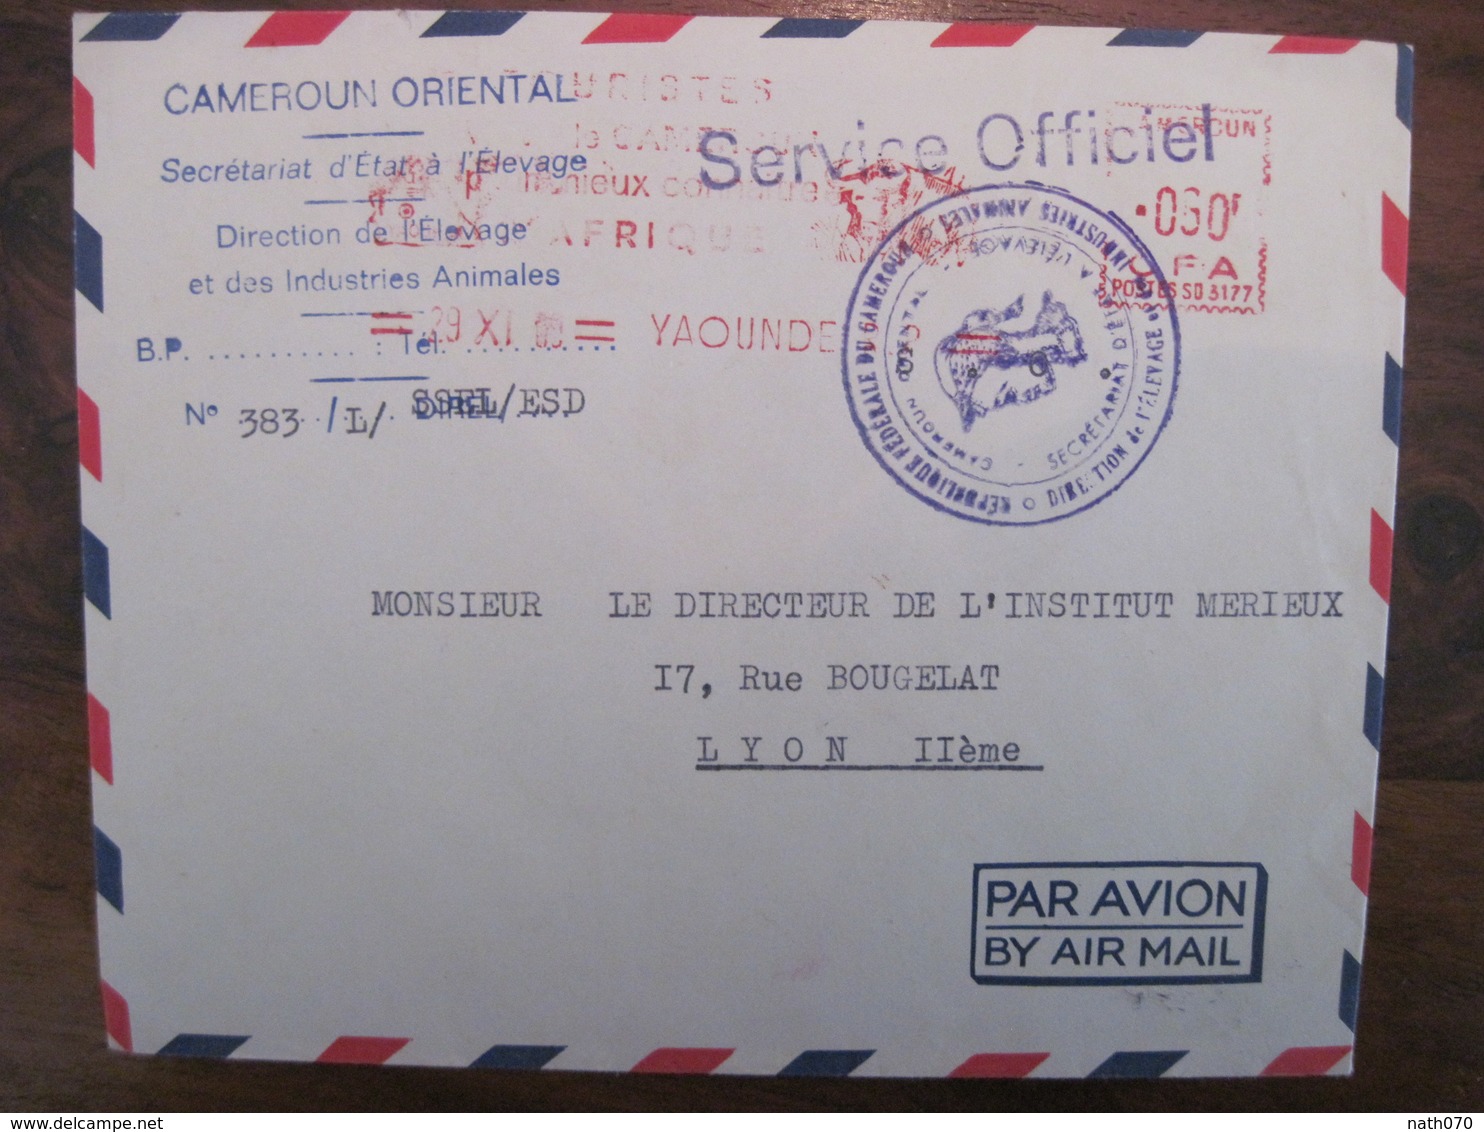 CAMEROUN Oriental France Institut MERIEUX Lettre Enveloppe Cover Colonie AOF - Lettres & Documents